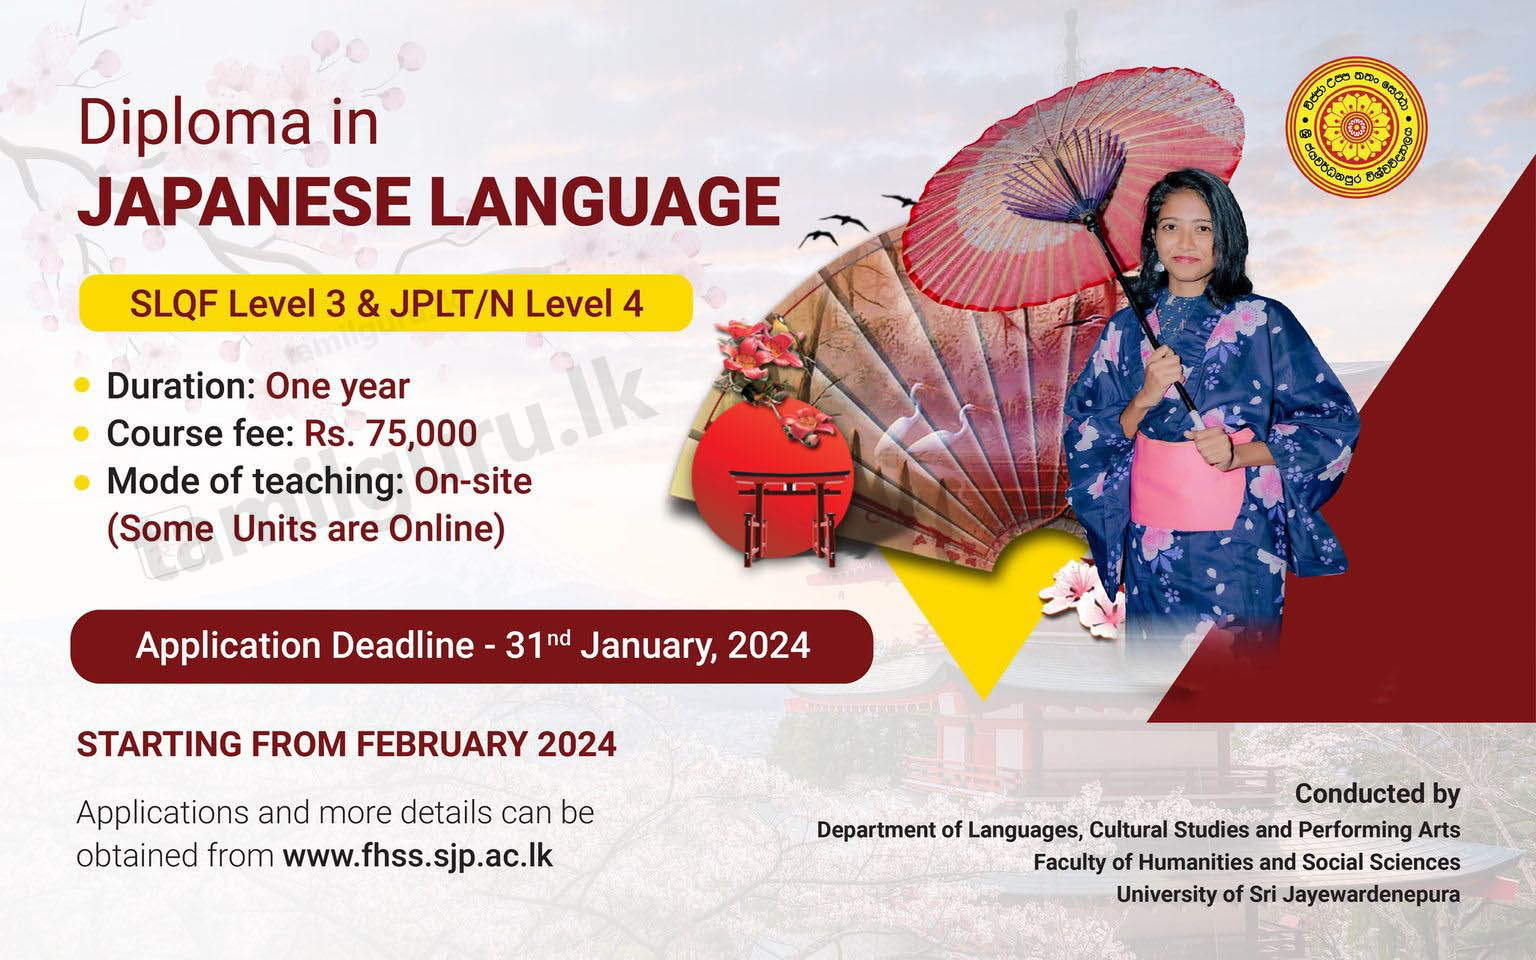 Diploma in Japanese Language 2024 - University of Sri Jayewardenepura